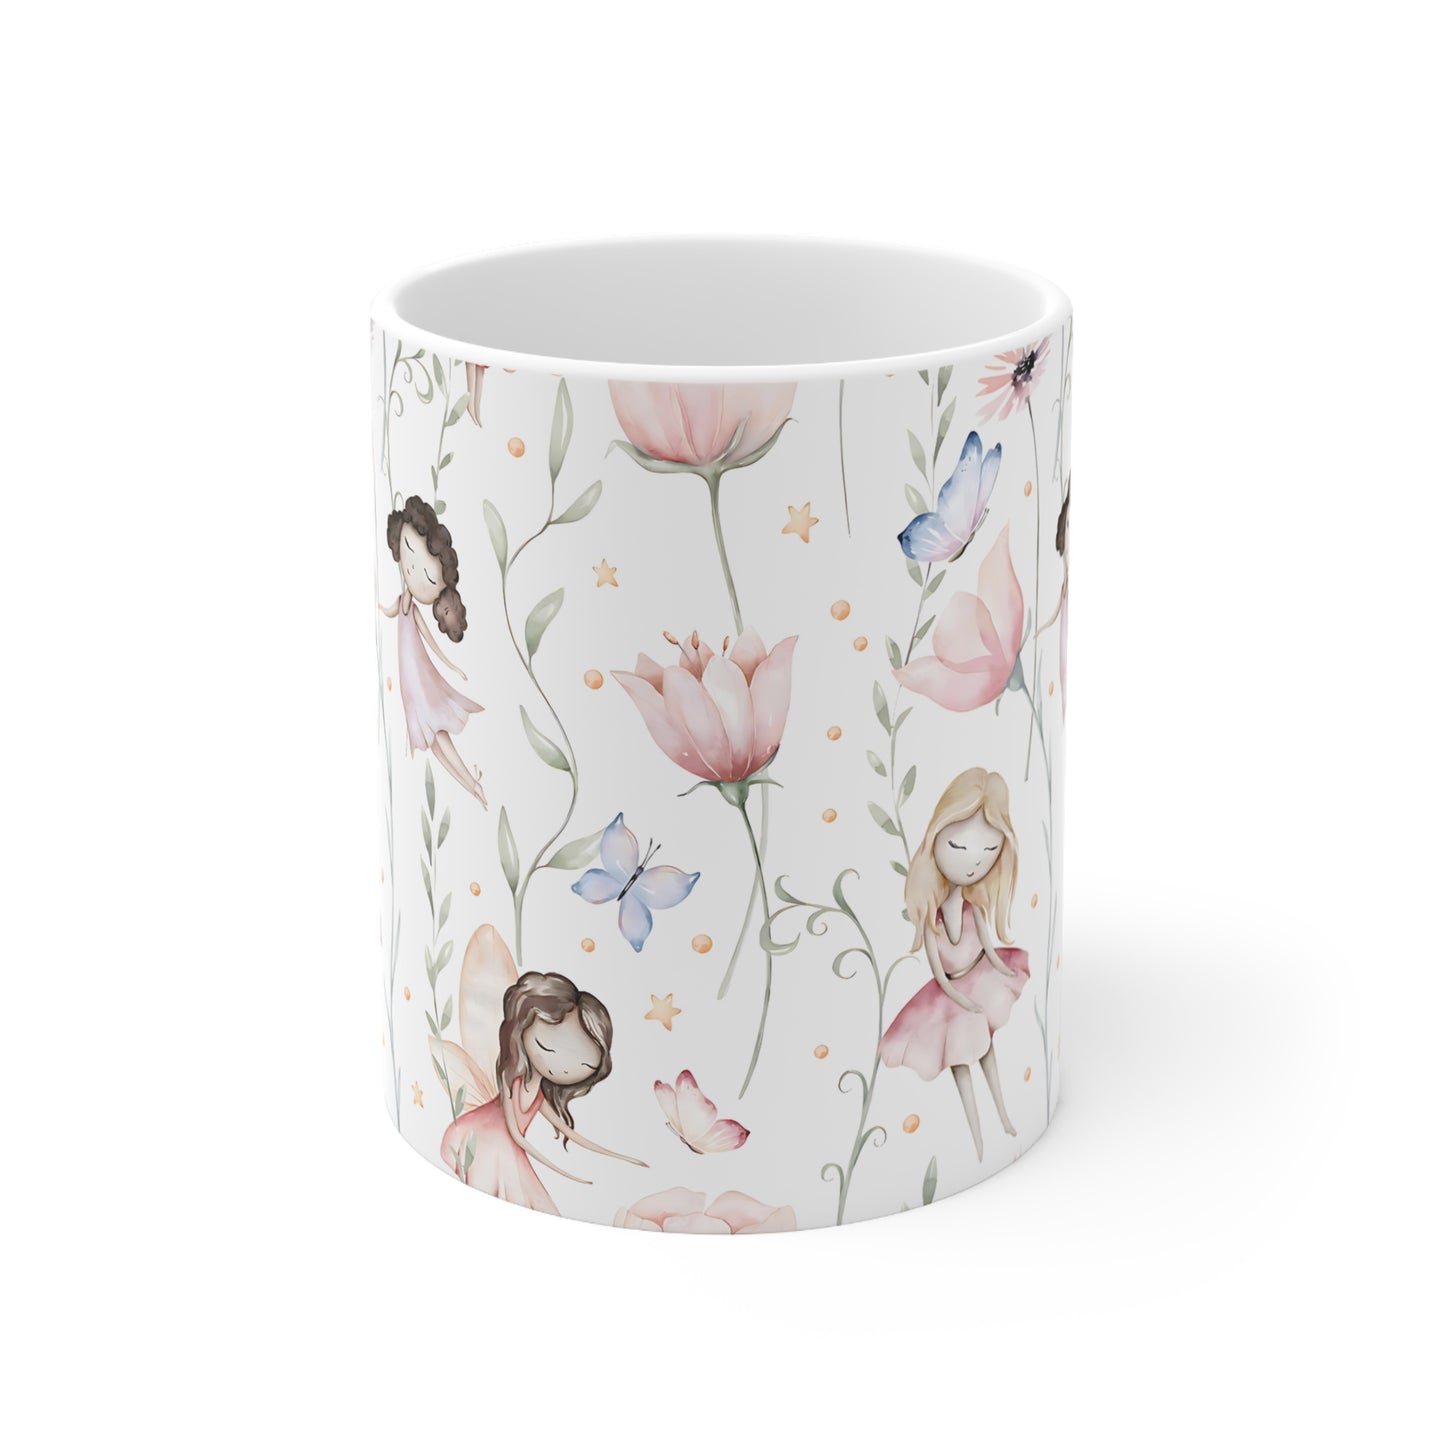 Sleepy Fairy Ceramic Mug, 11oz